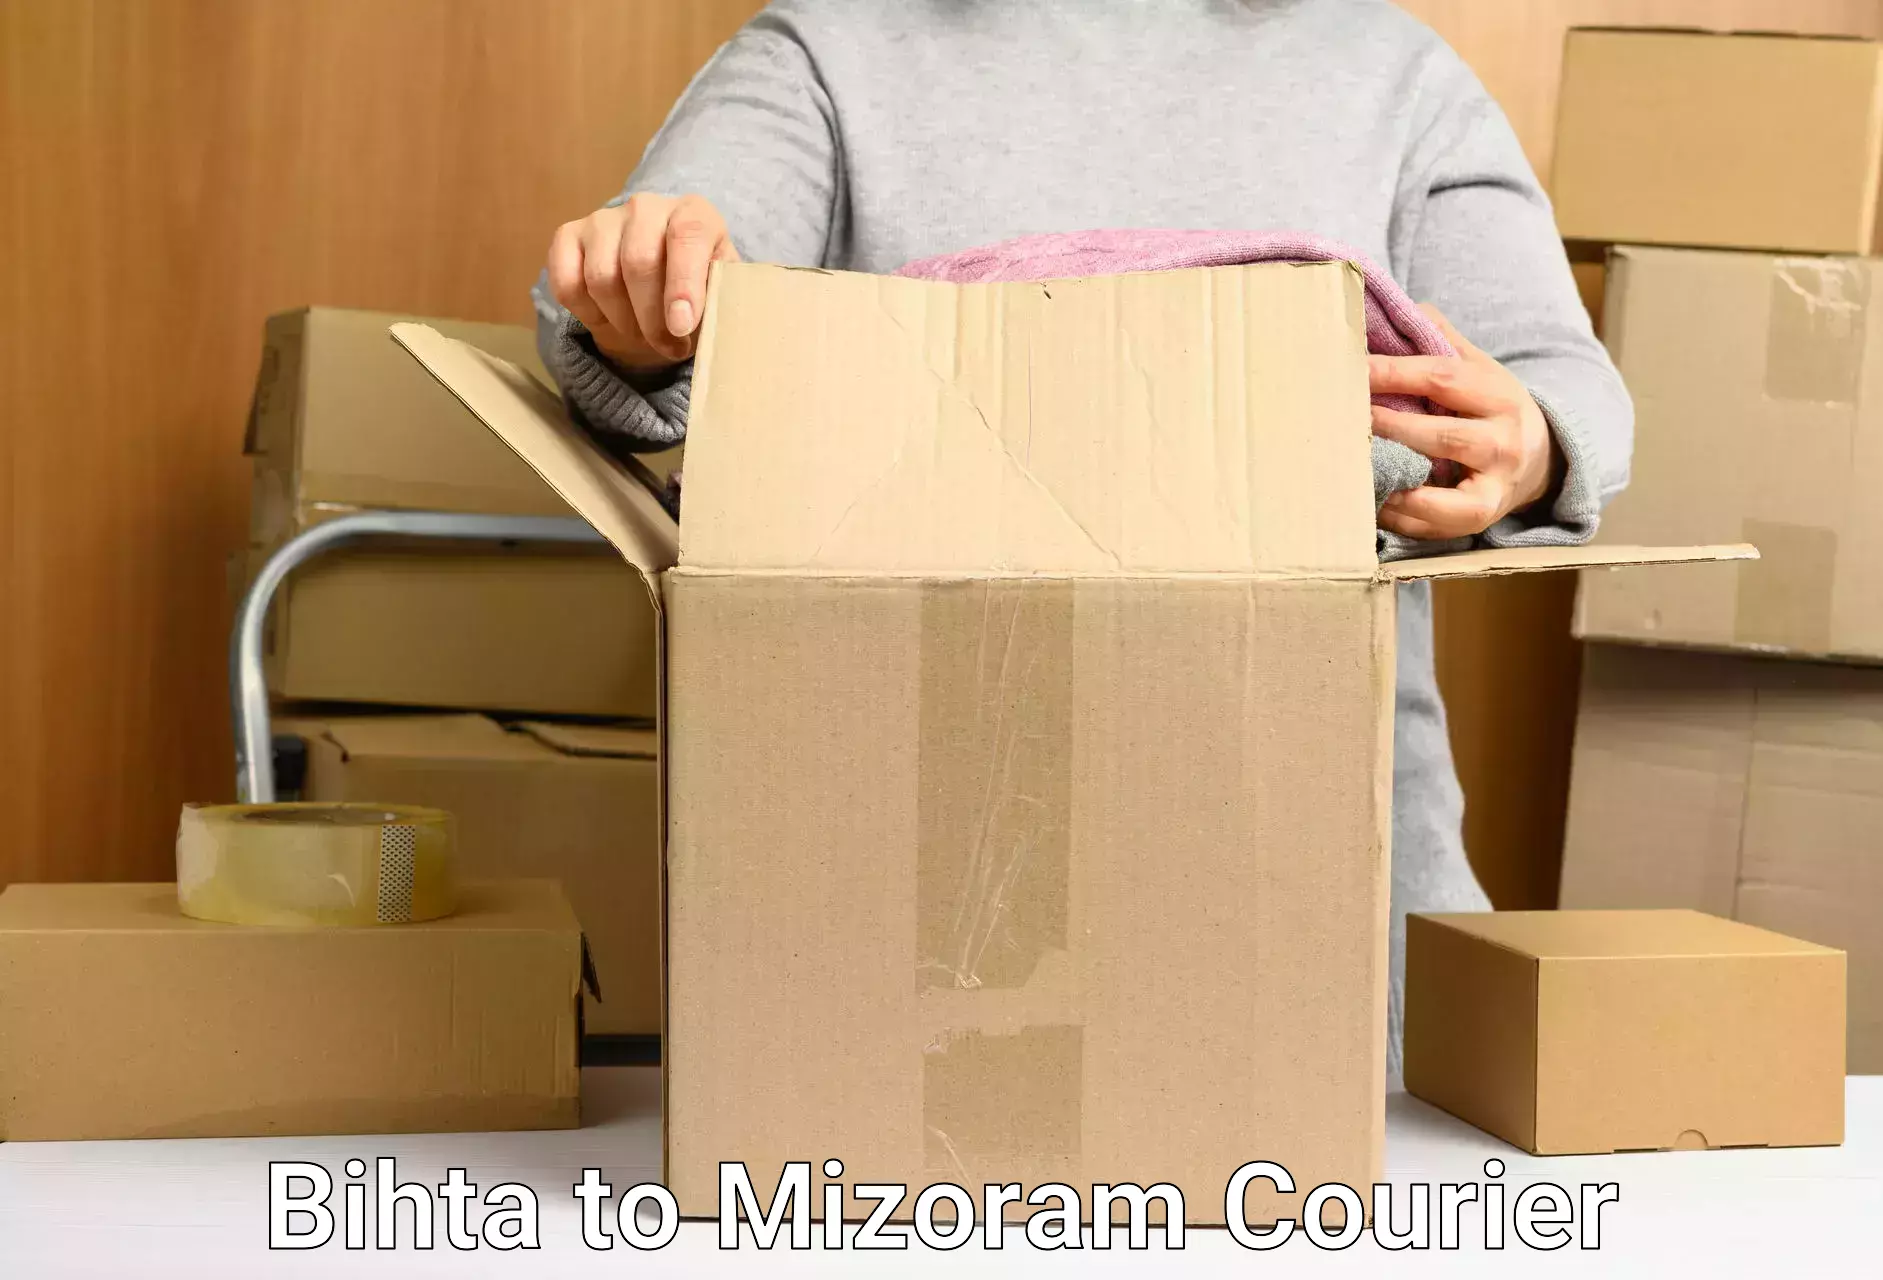 Sustainable delivery practices in Bihta to Mizoram